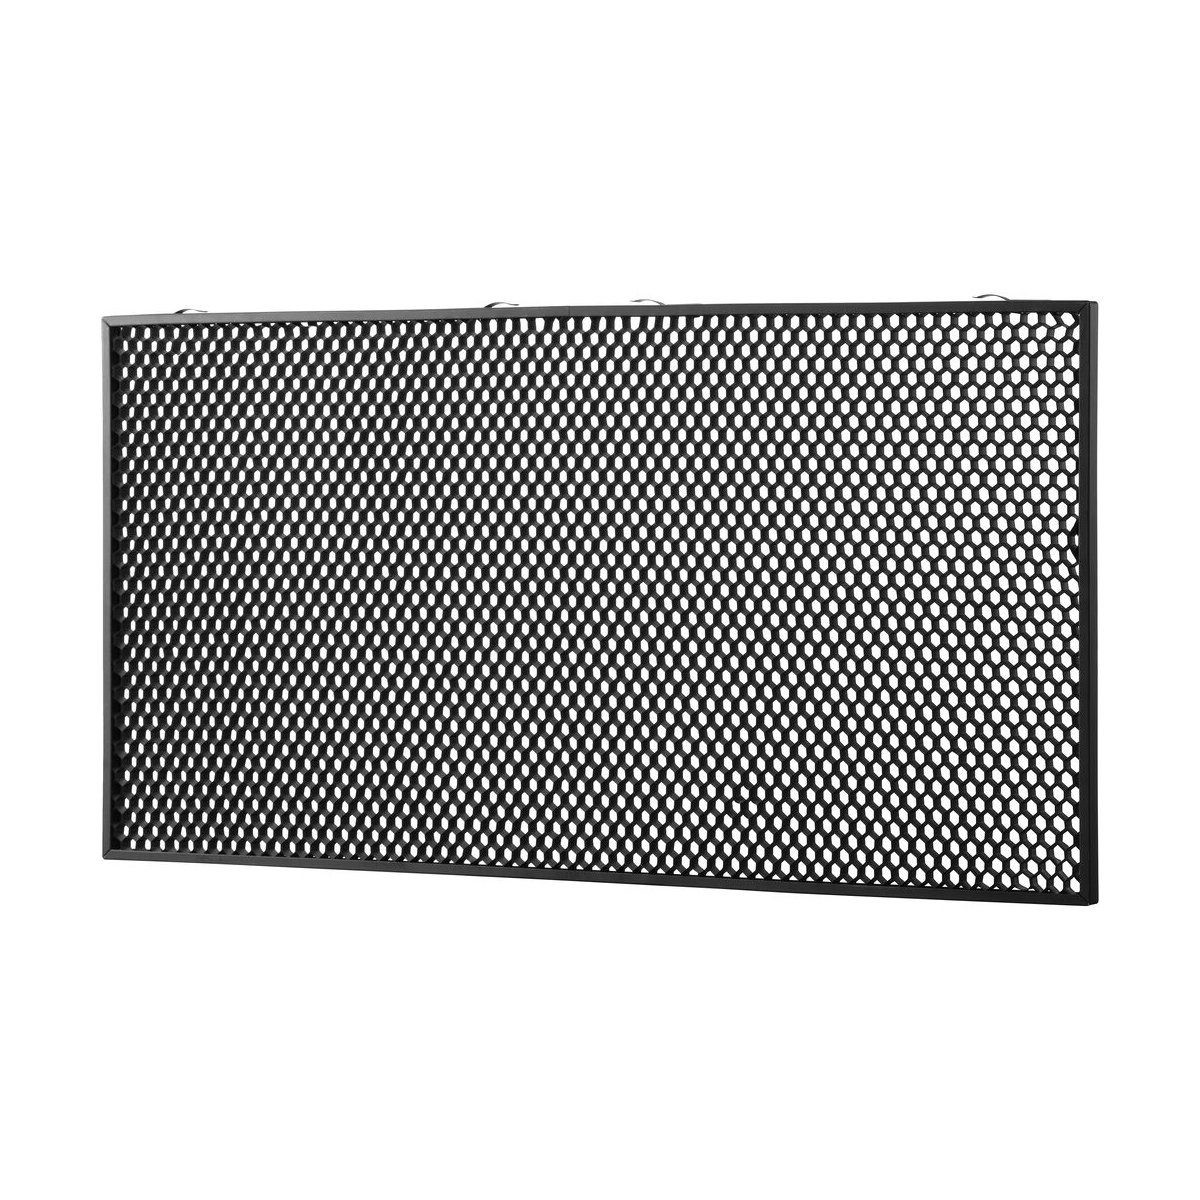 Godox Honey Comb Grid 30 Degree voor Knowled P600R Panel Light